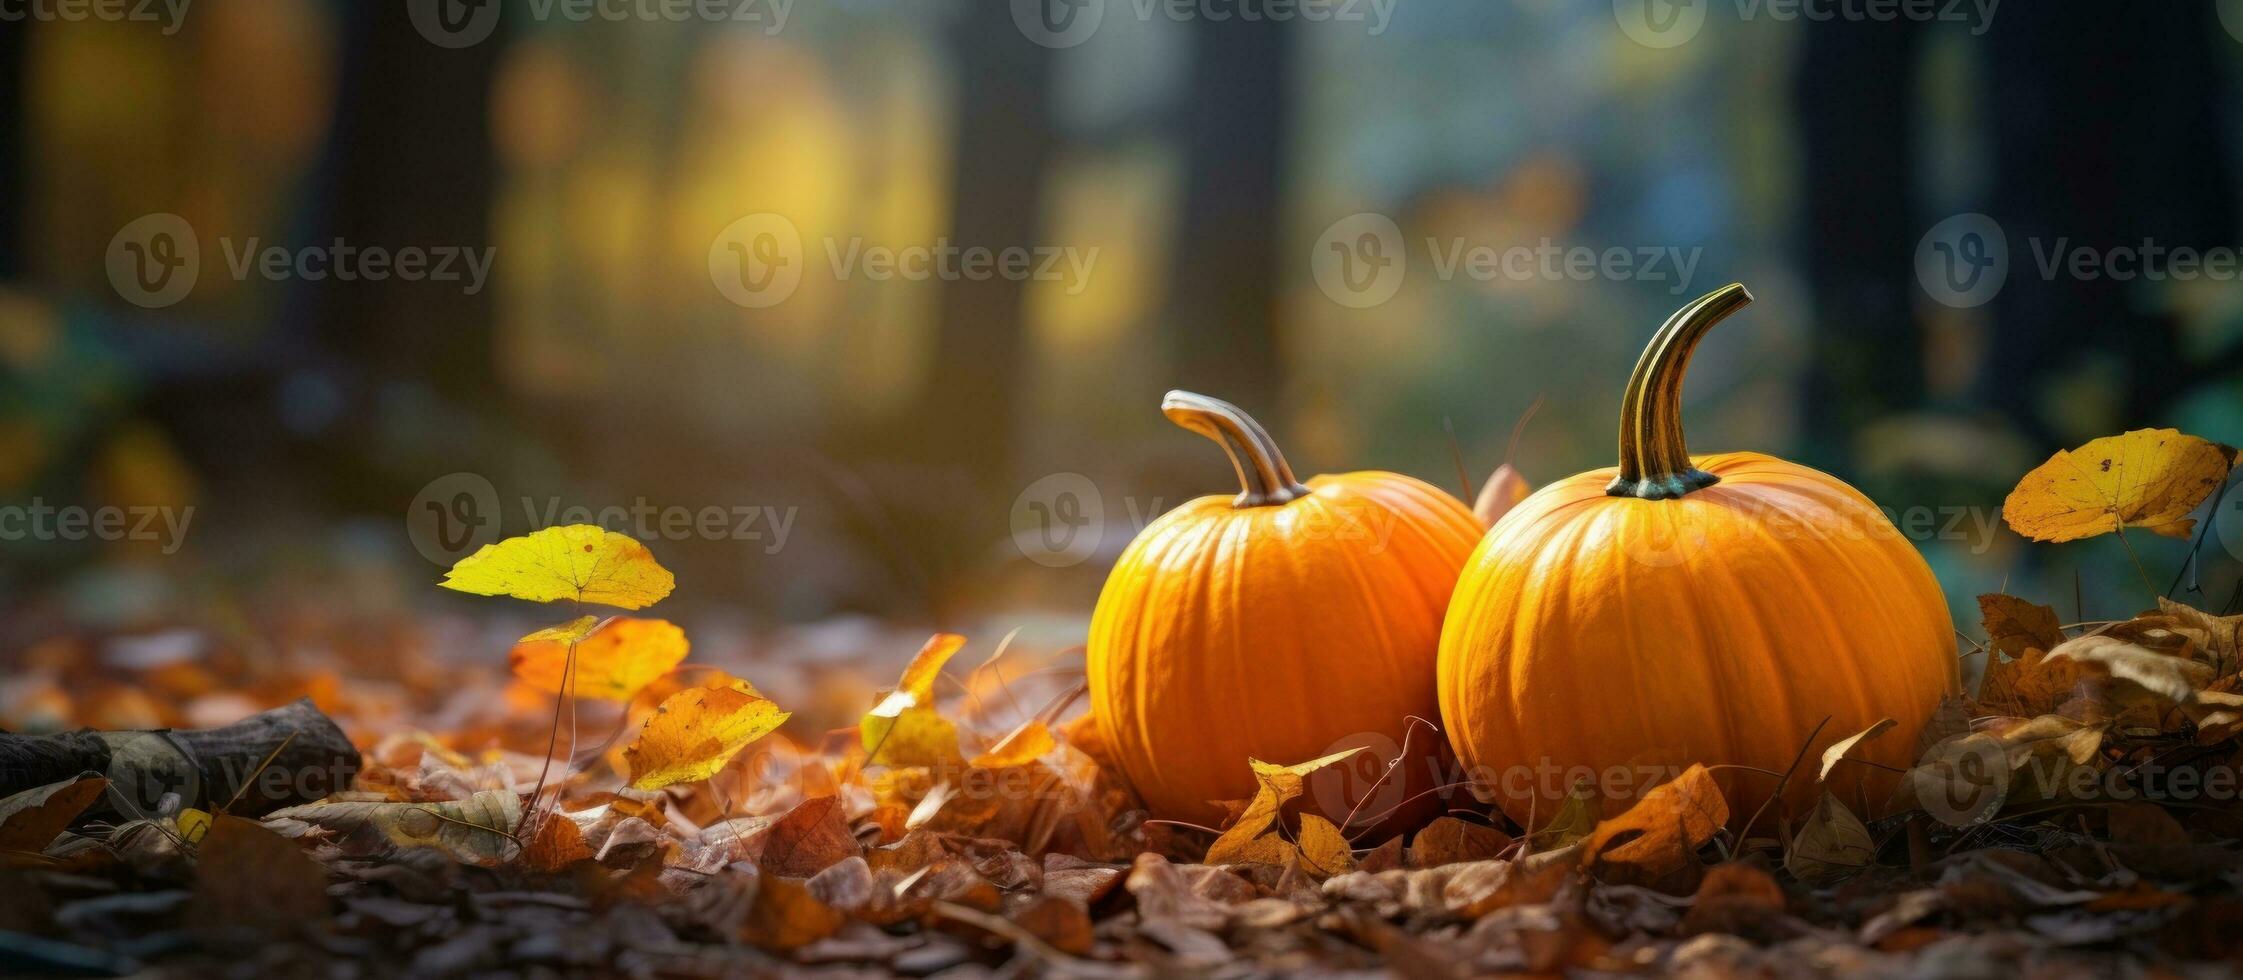 otoño natural antecedentes con calabazas foto